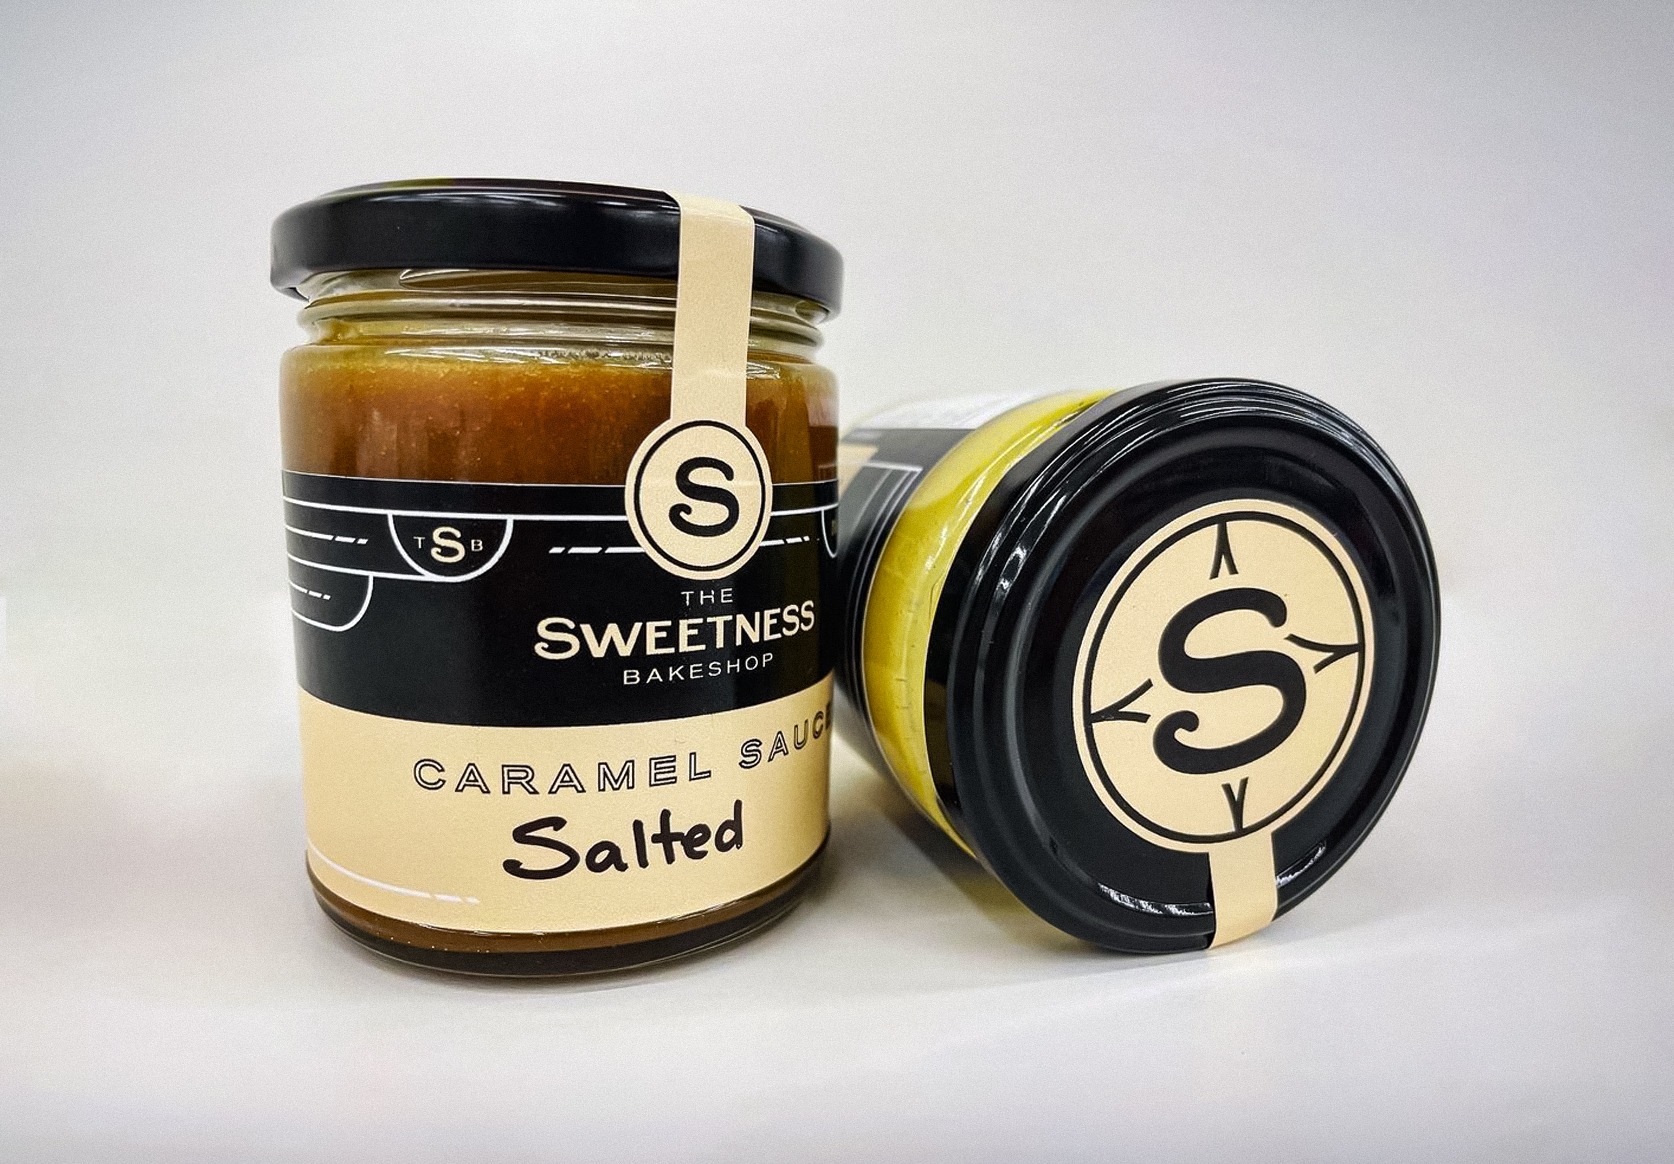 The Sweetness Bakeshop Caramel Sauce and Lemon Curd Packaging Jars